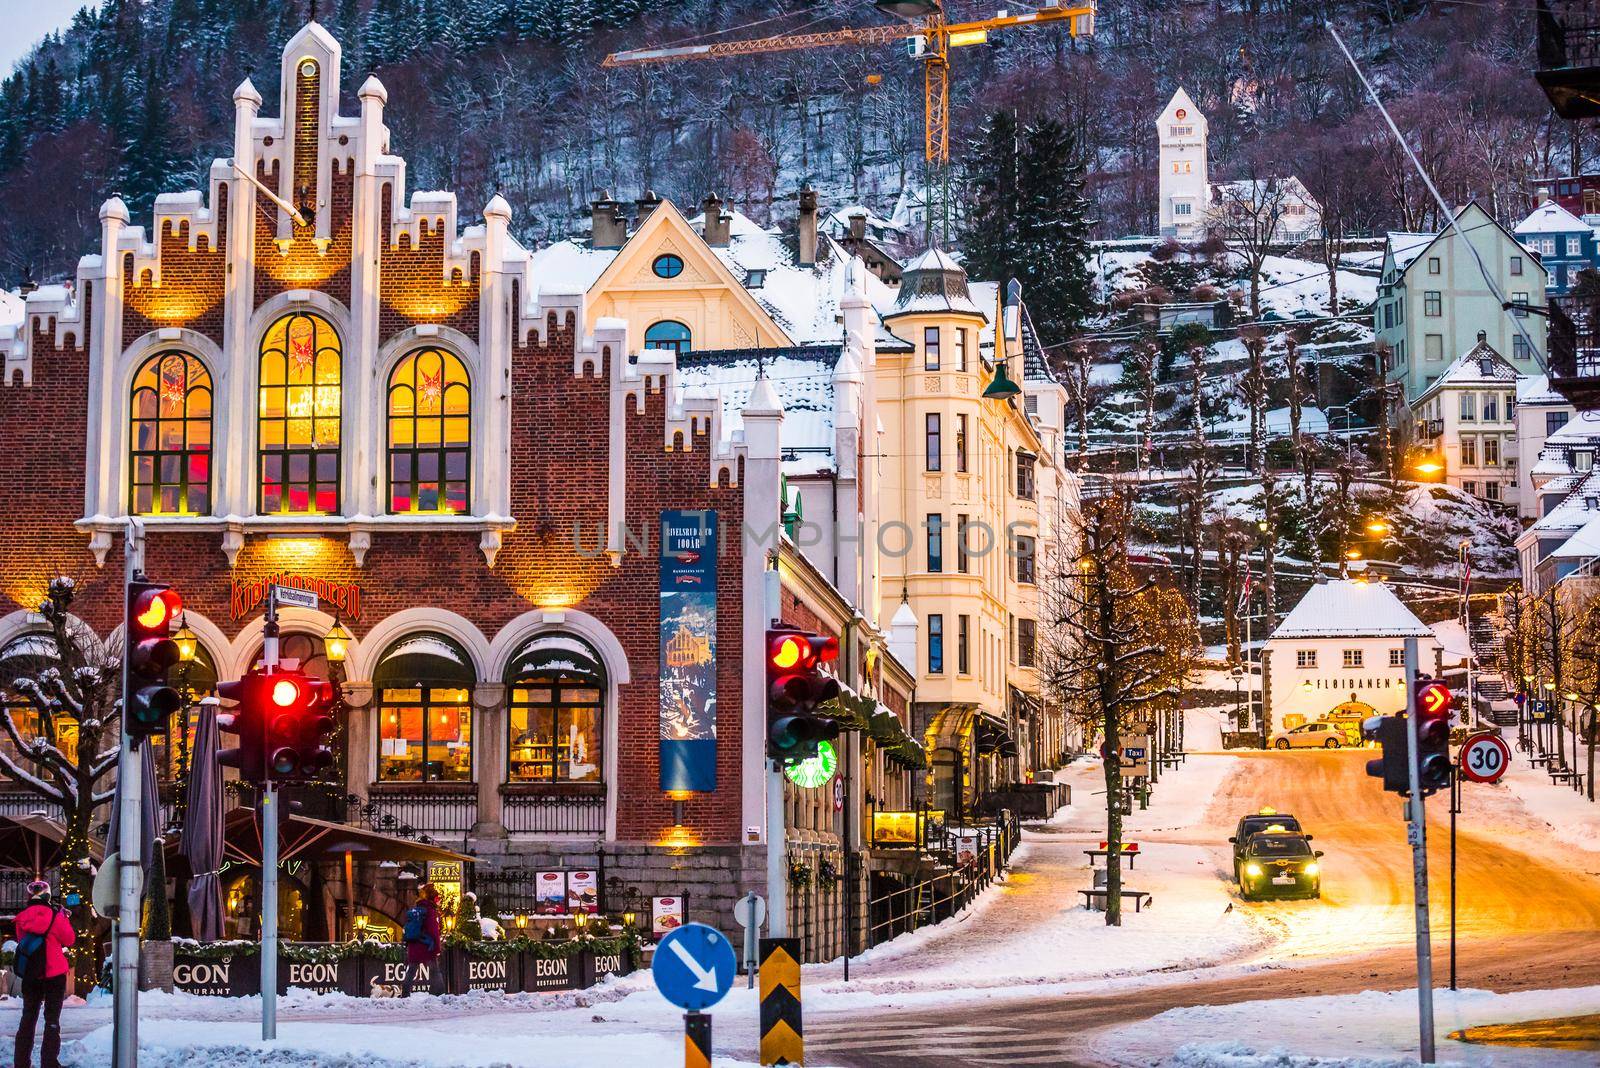 Bergen, Norway - December 27, 2014: evening the streets of Bergen at Christmas, Norway